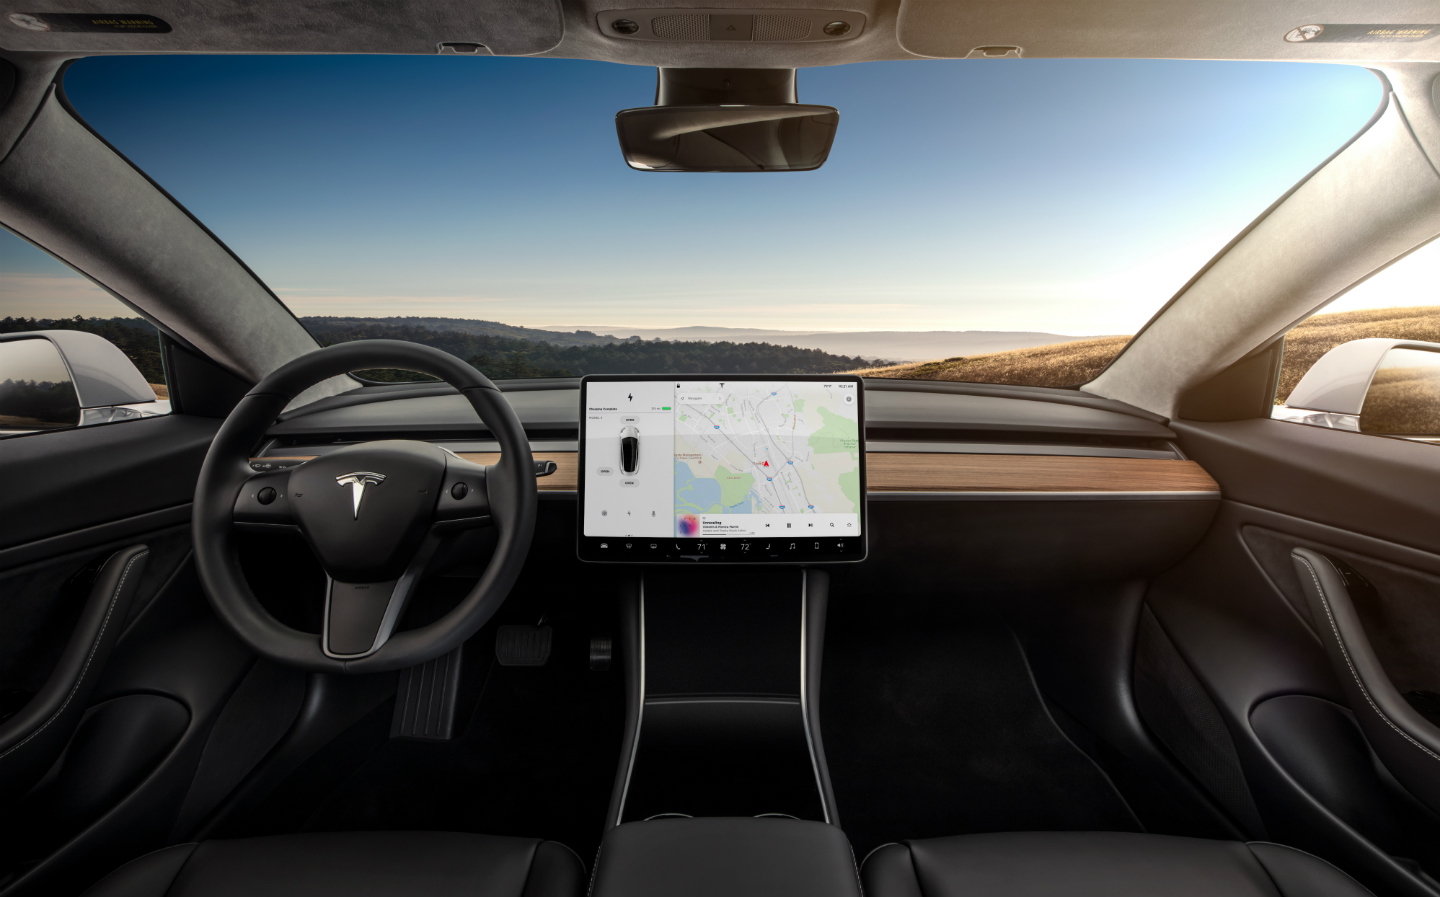 Tesla Model 3 dashboard and touchscreen